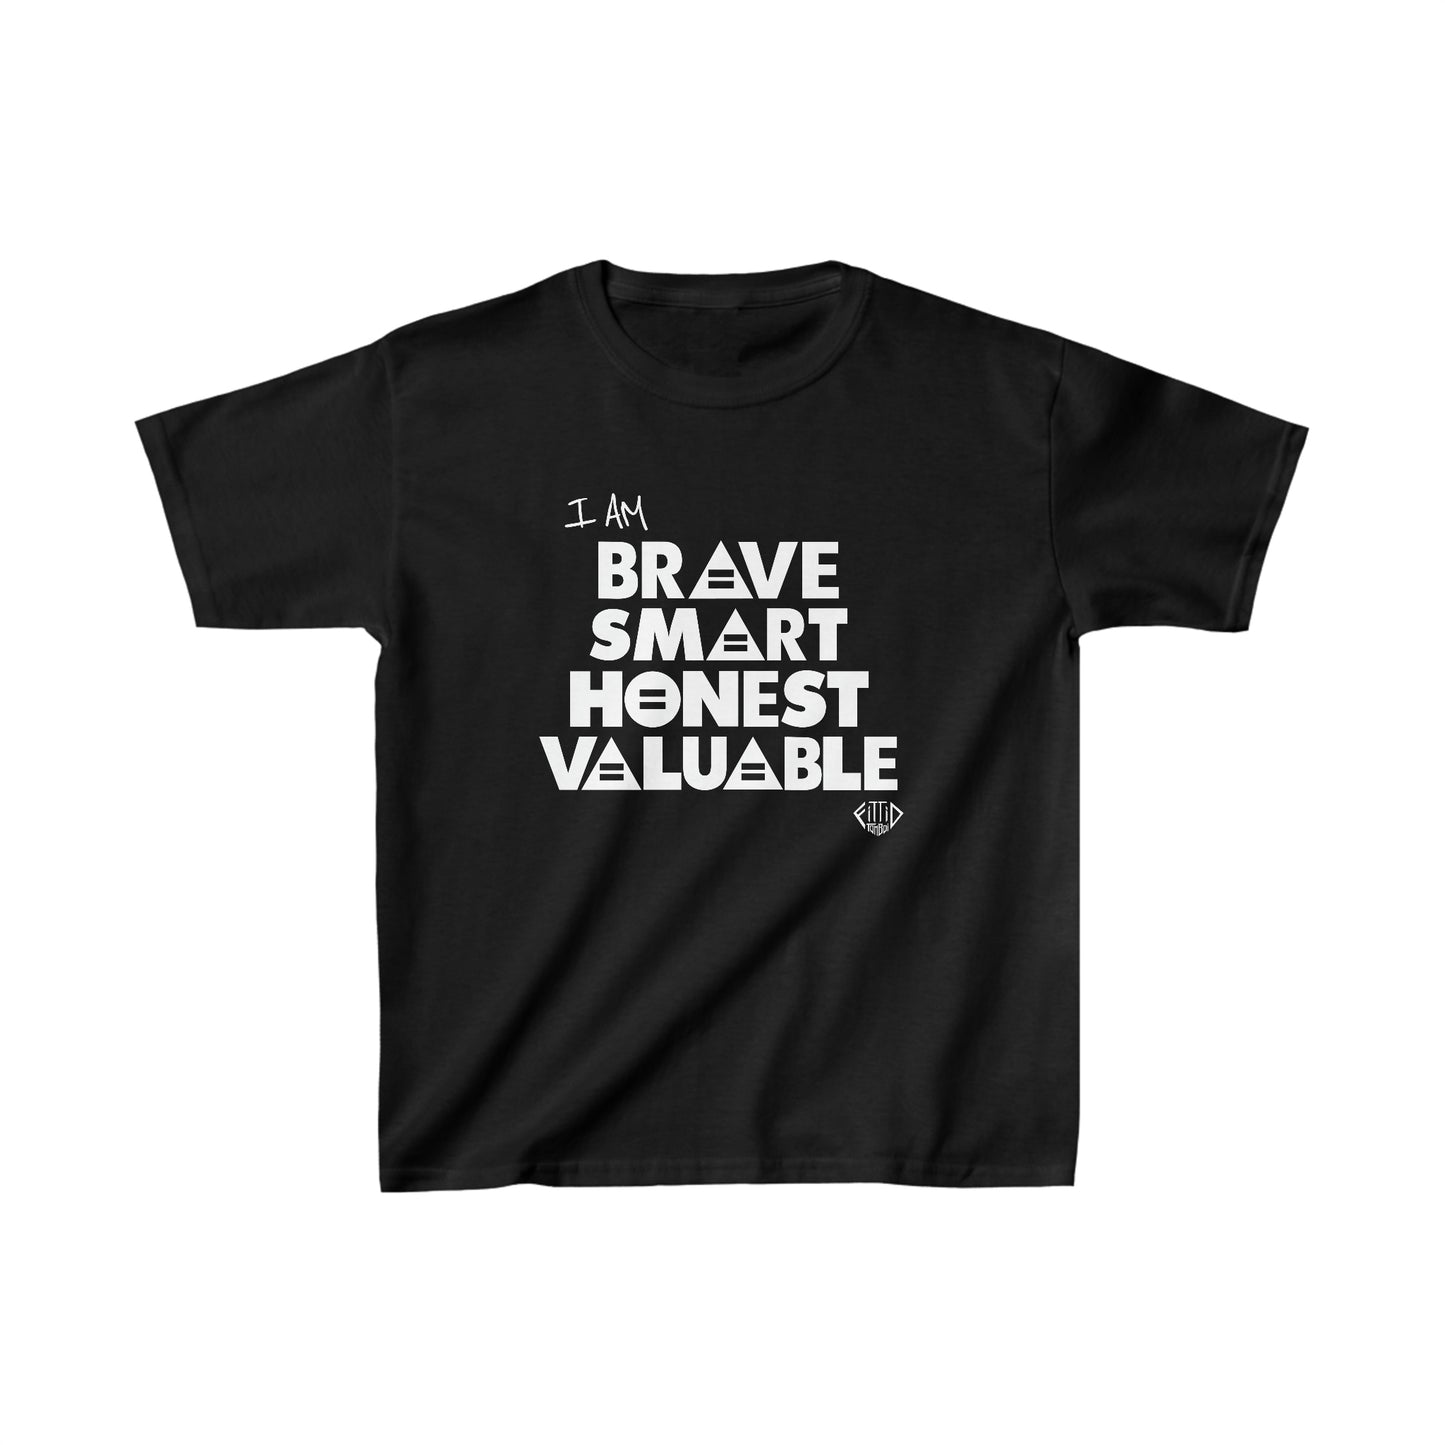 I AM BRAVE SMART HONEST VALUABLE Kids T-shirt